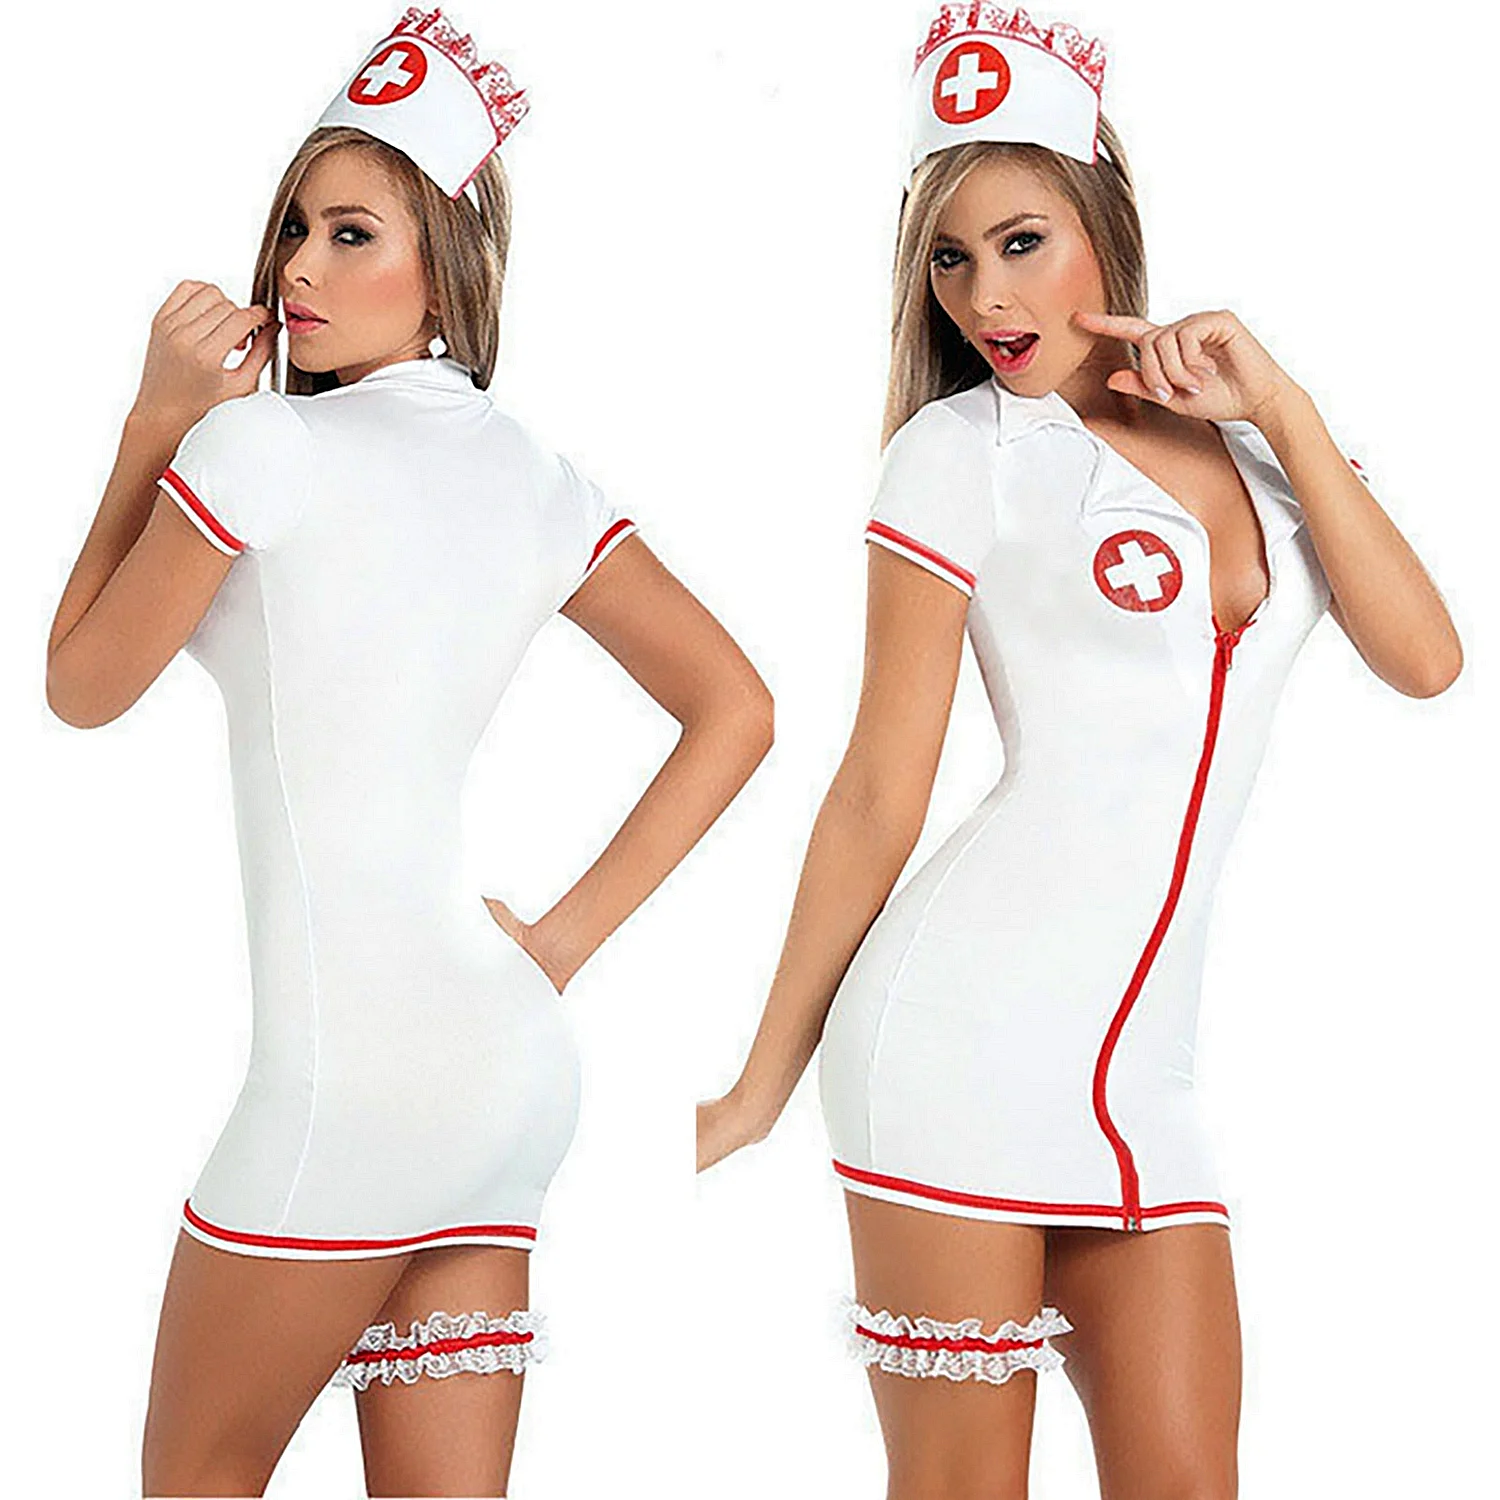 White hot nurses 4 cd1